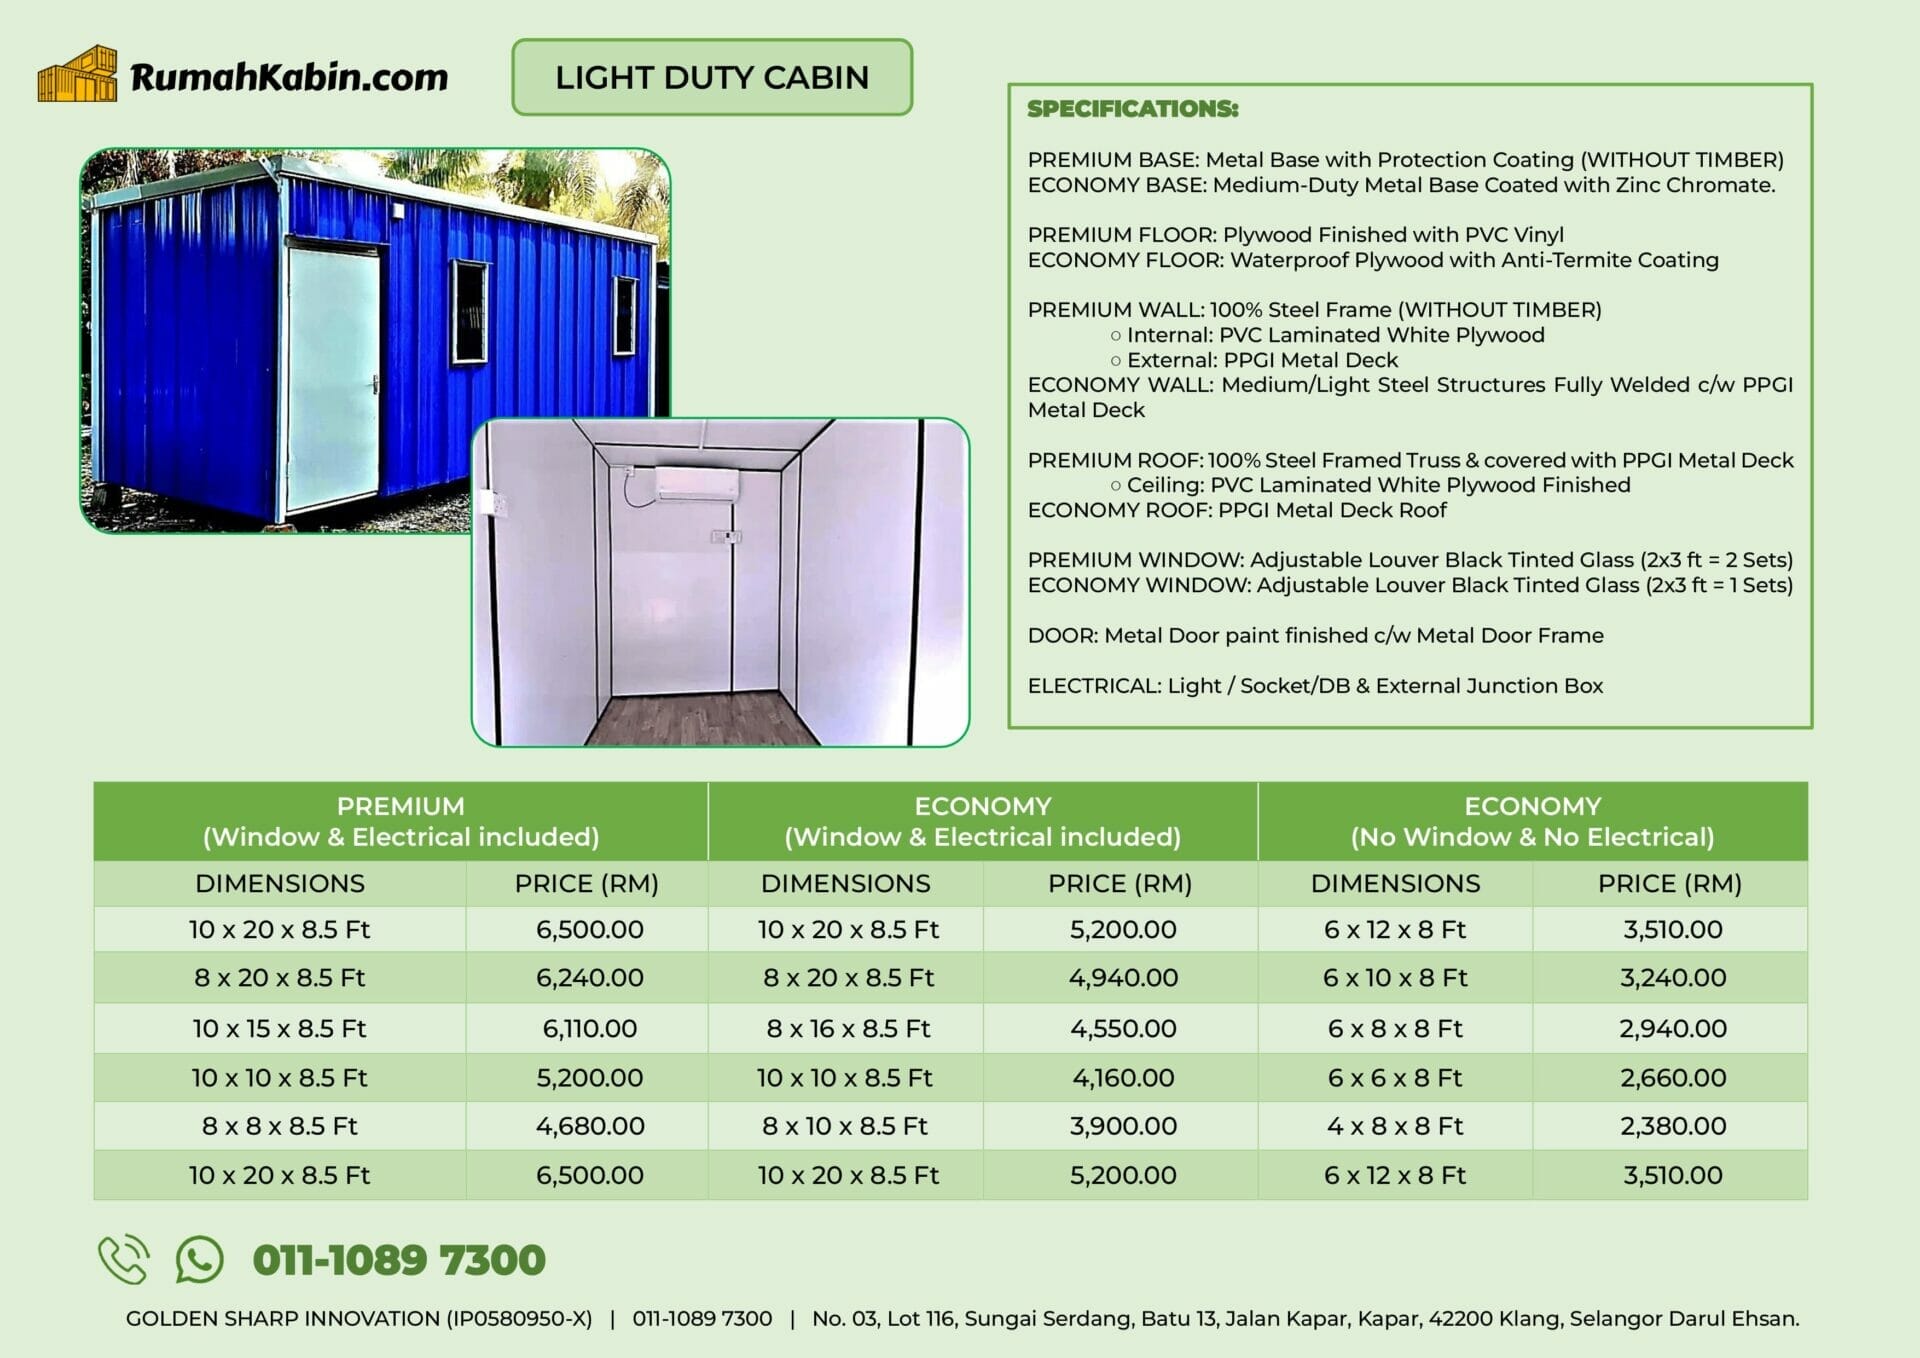 Light Duty Cabin RumahKabin.com